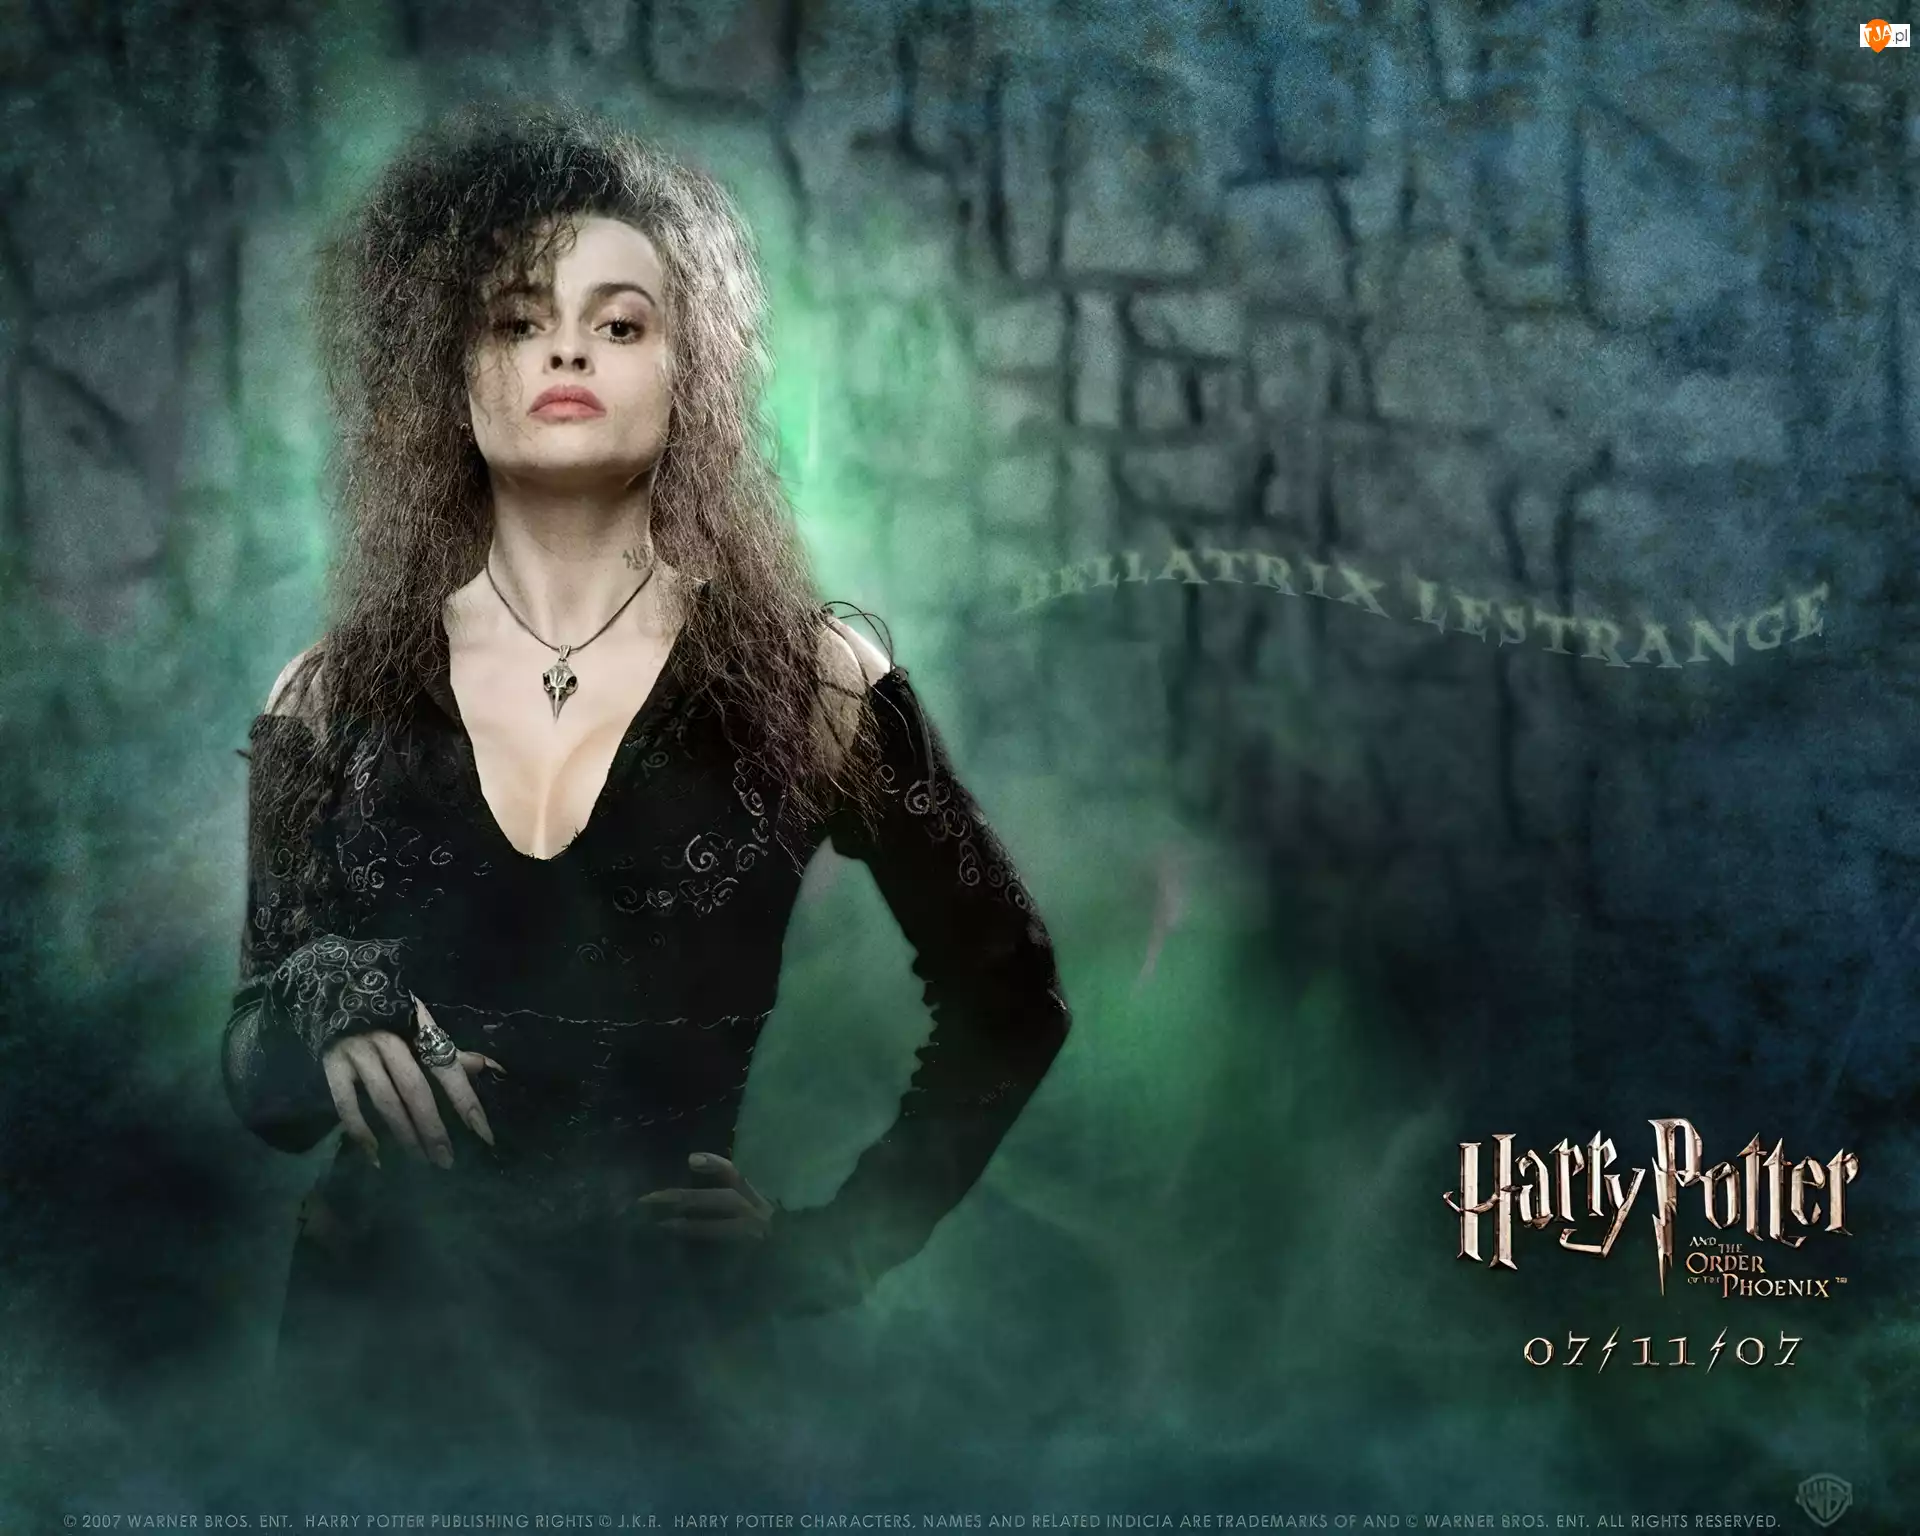 Wiedźma, Harry Potter, Bellatrix Black